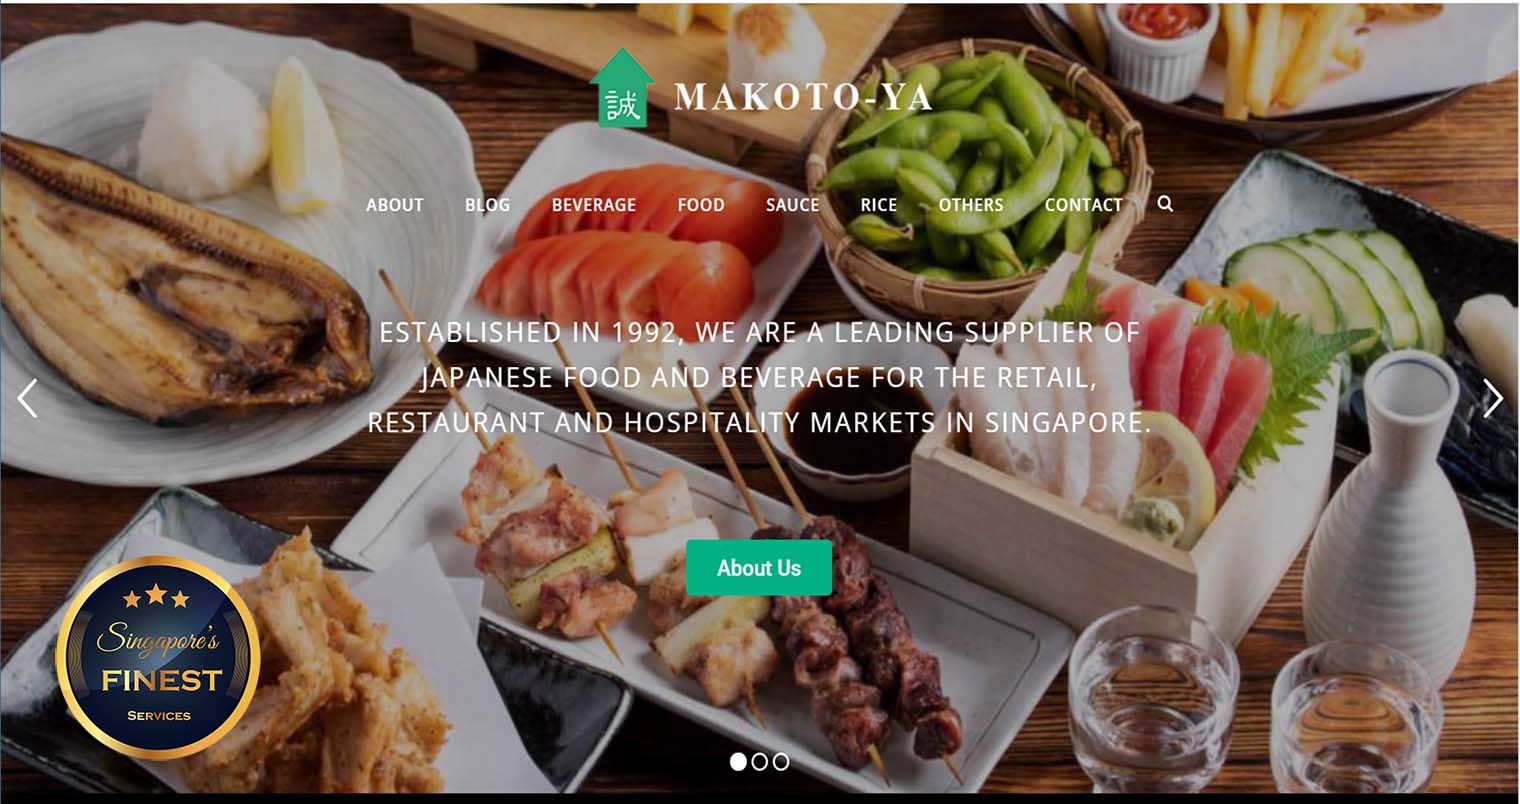 Makoto – Ya - Wholesale Food Suppliers in Singapore